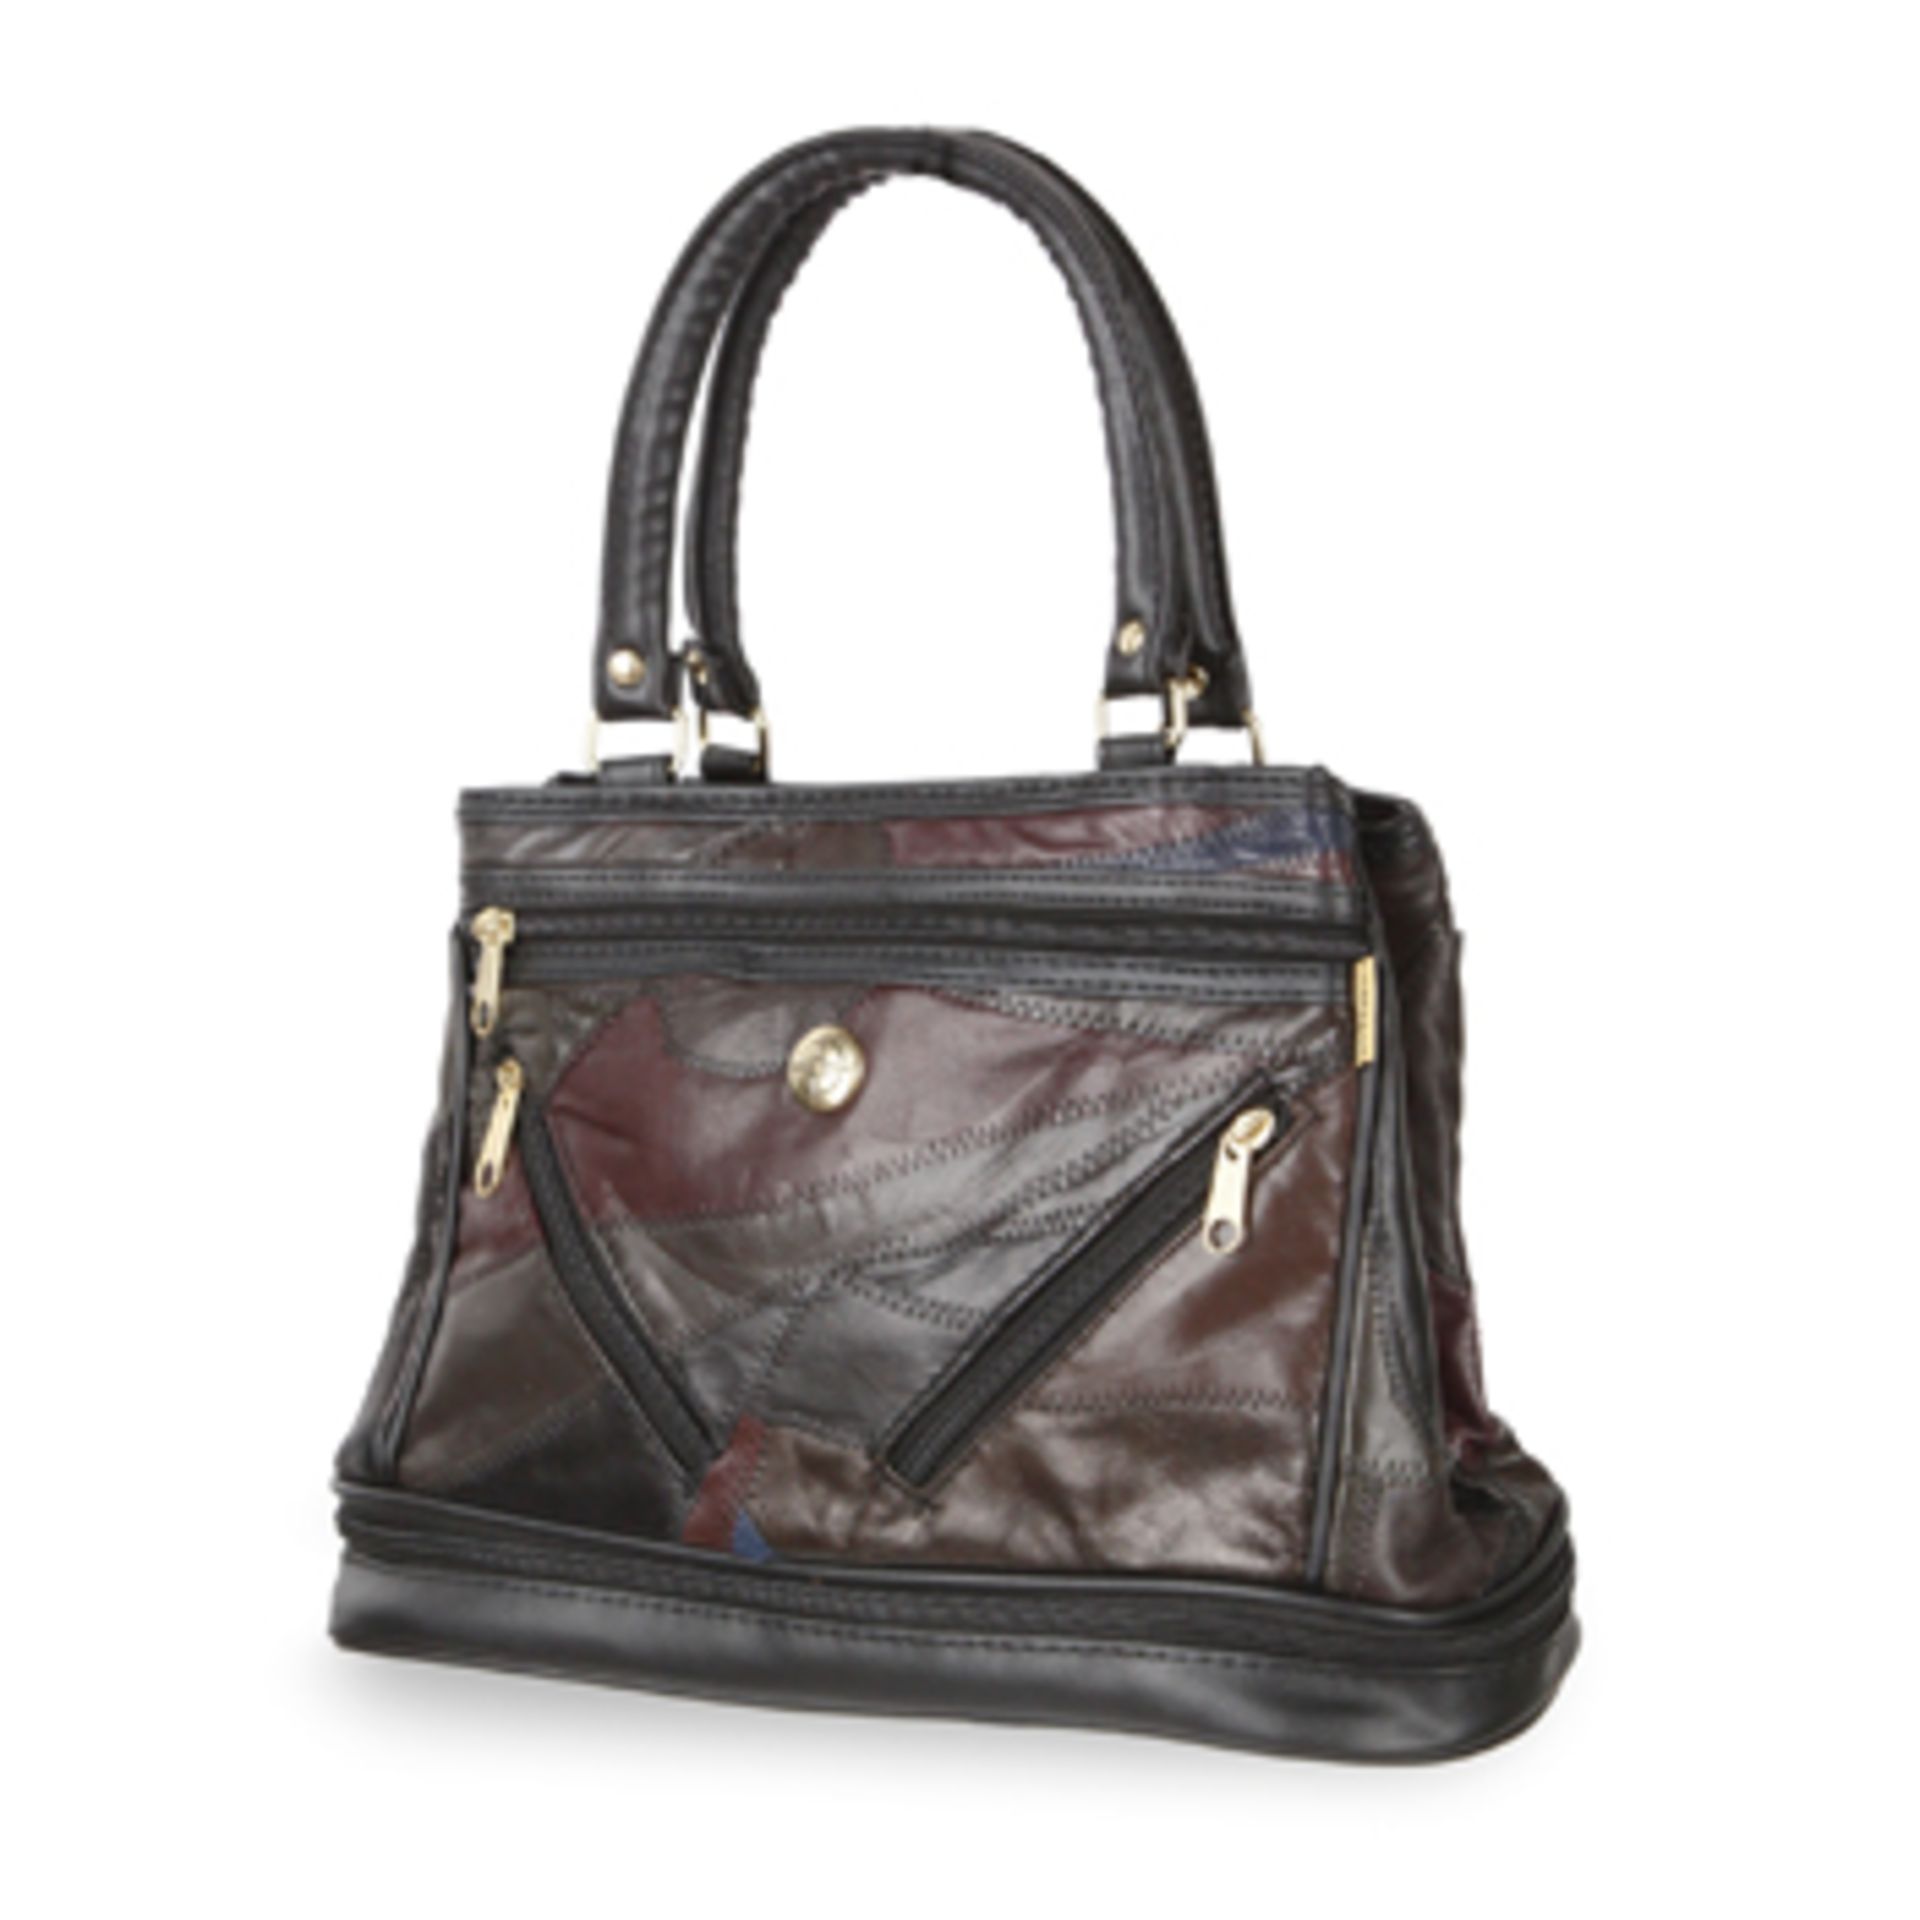 V *TRADE QTY* Brand New Leather Ladies Handbag - Multi-coloured X 7 YOUR BID PRICE TO BE